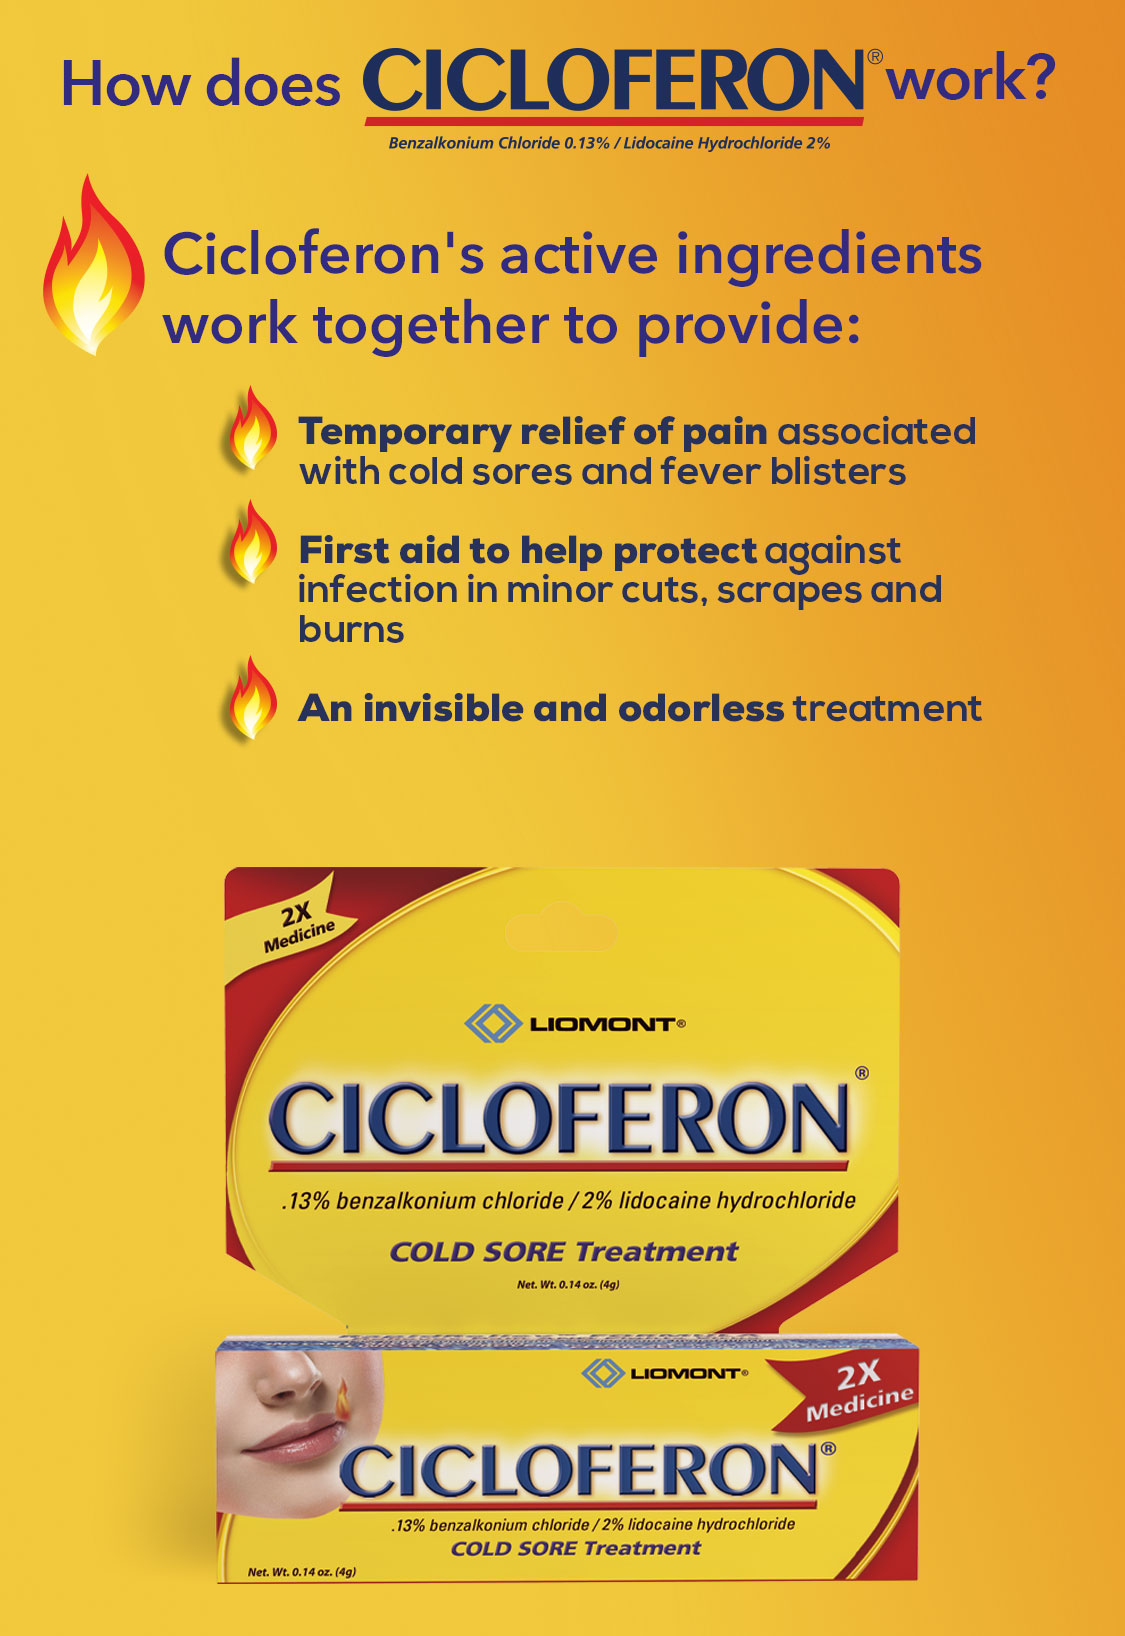 How works Cicloferon